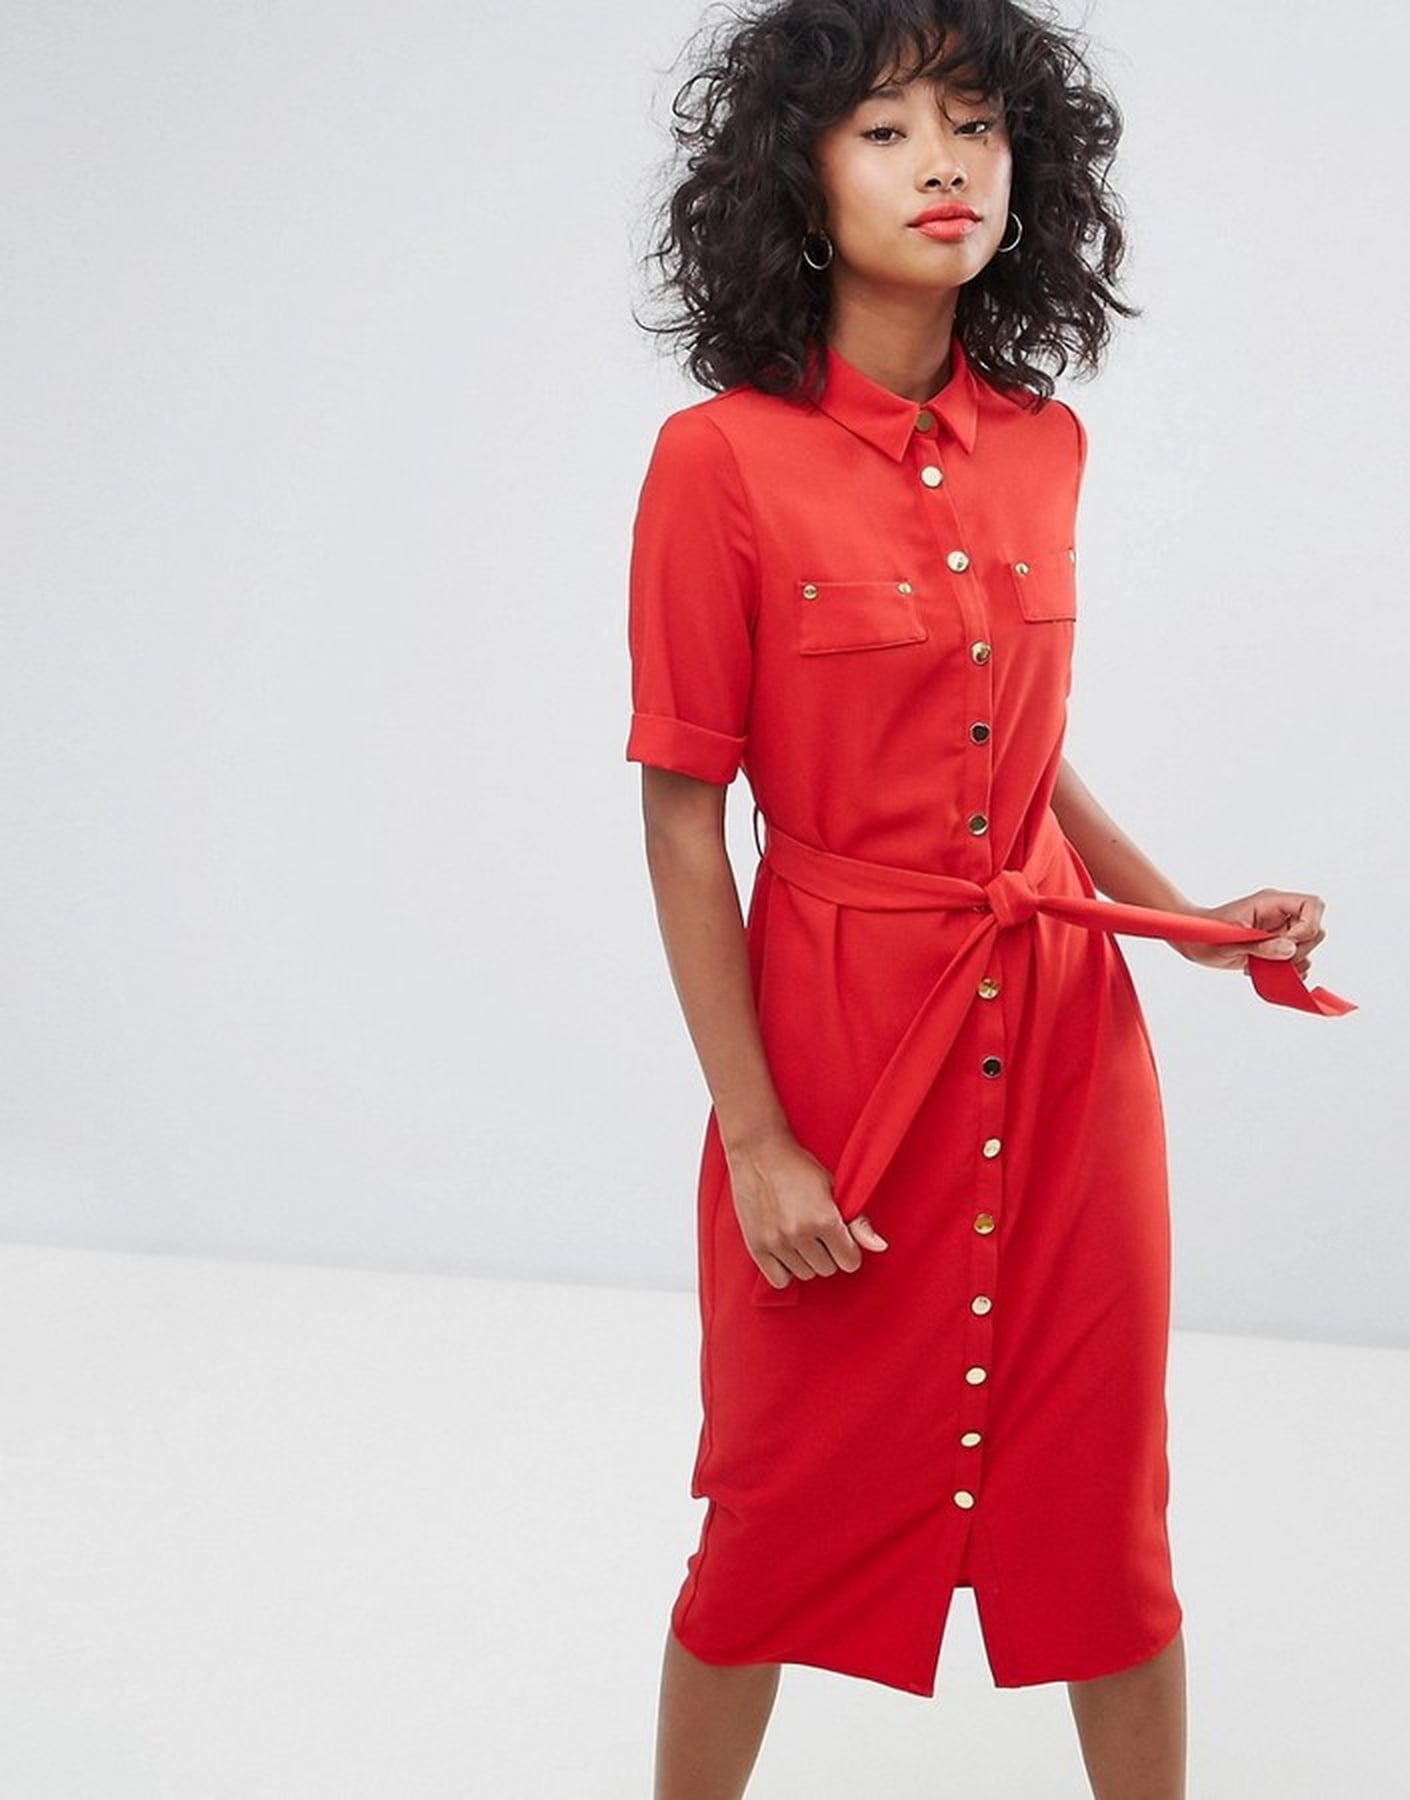 Victoria Beckham Red Dress Spring 2018 Collection | POPSUGAR Fashion